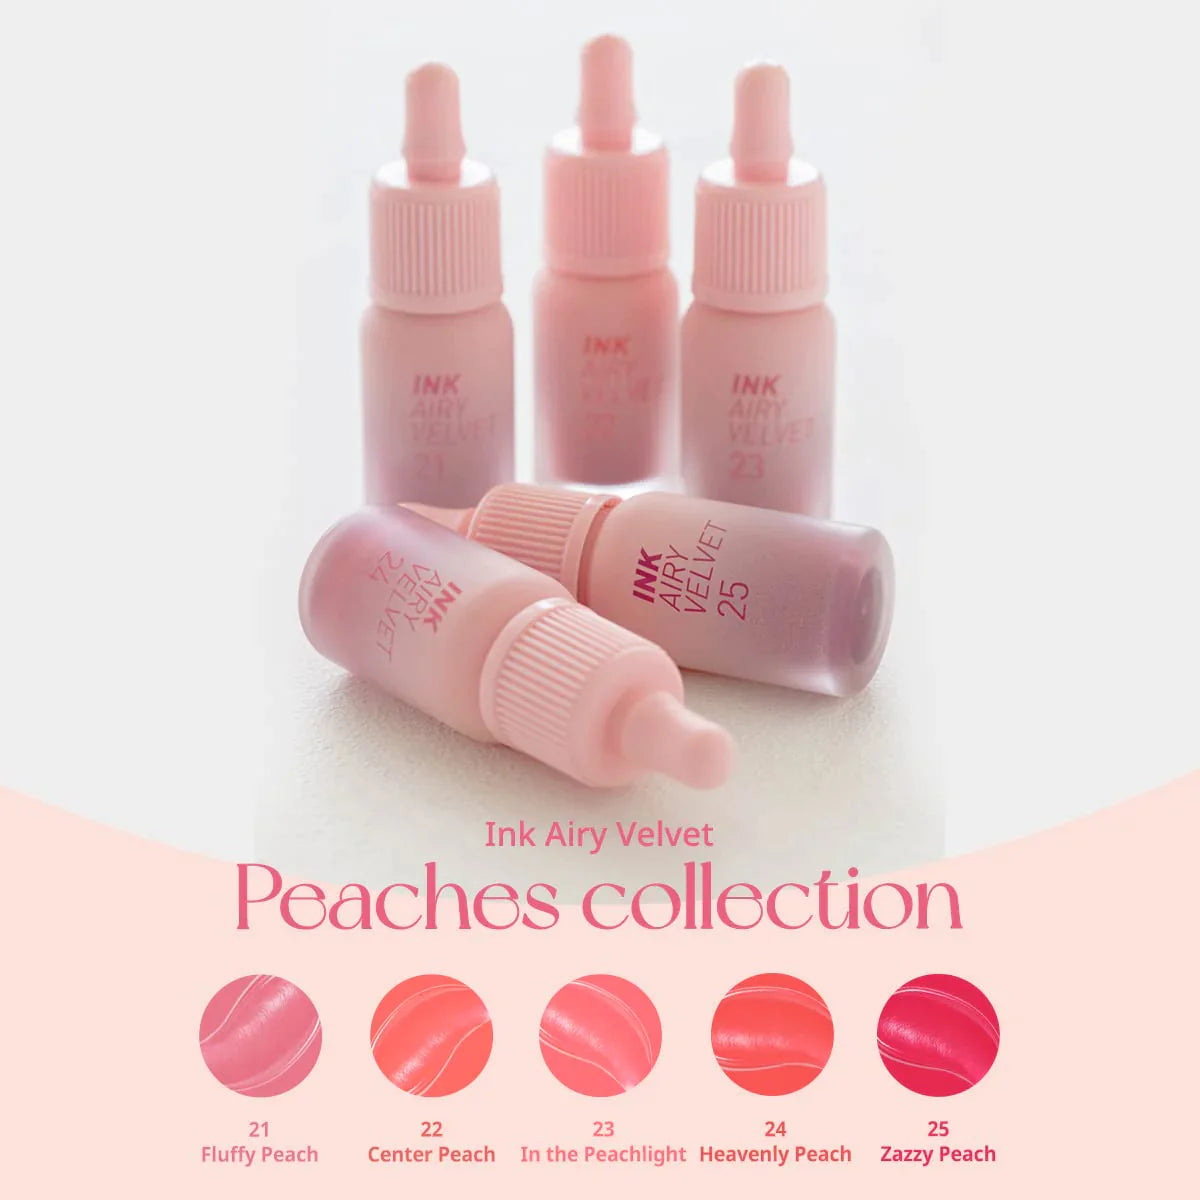 PERIPERA Ink Airy Velvet #21 Fluffy Peach Lip Tint 4g New Peaches Edition 